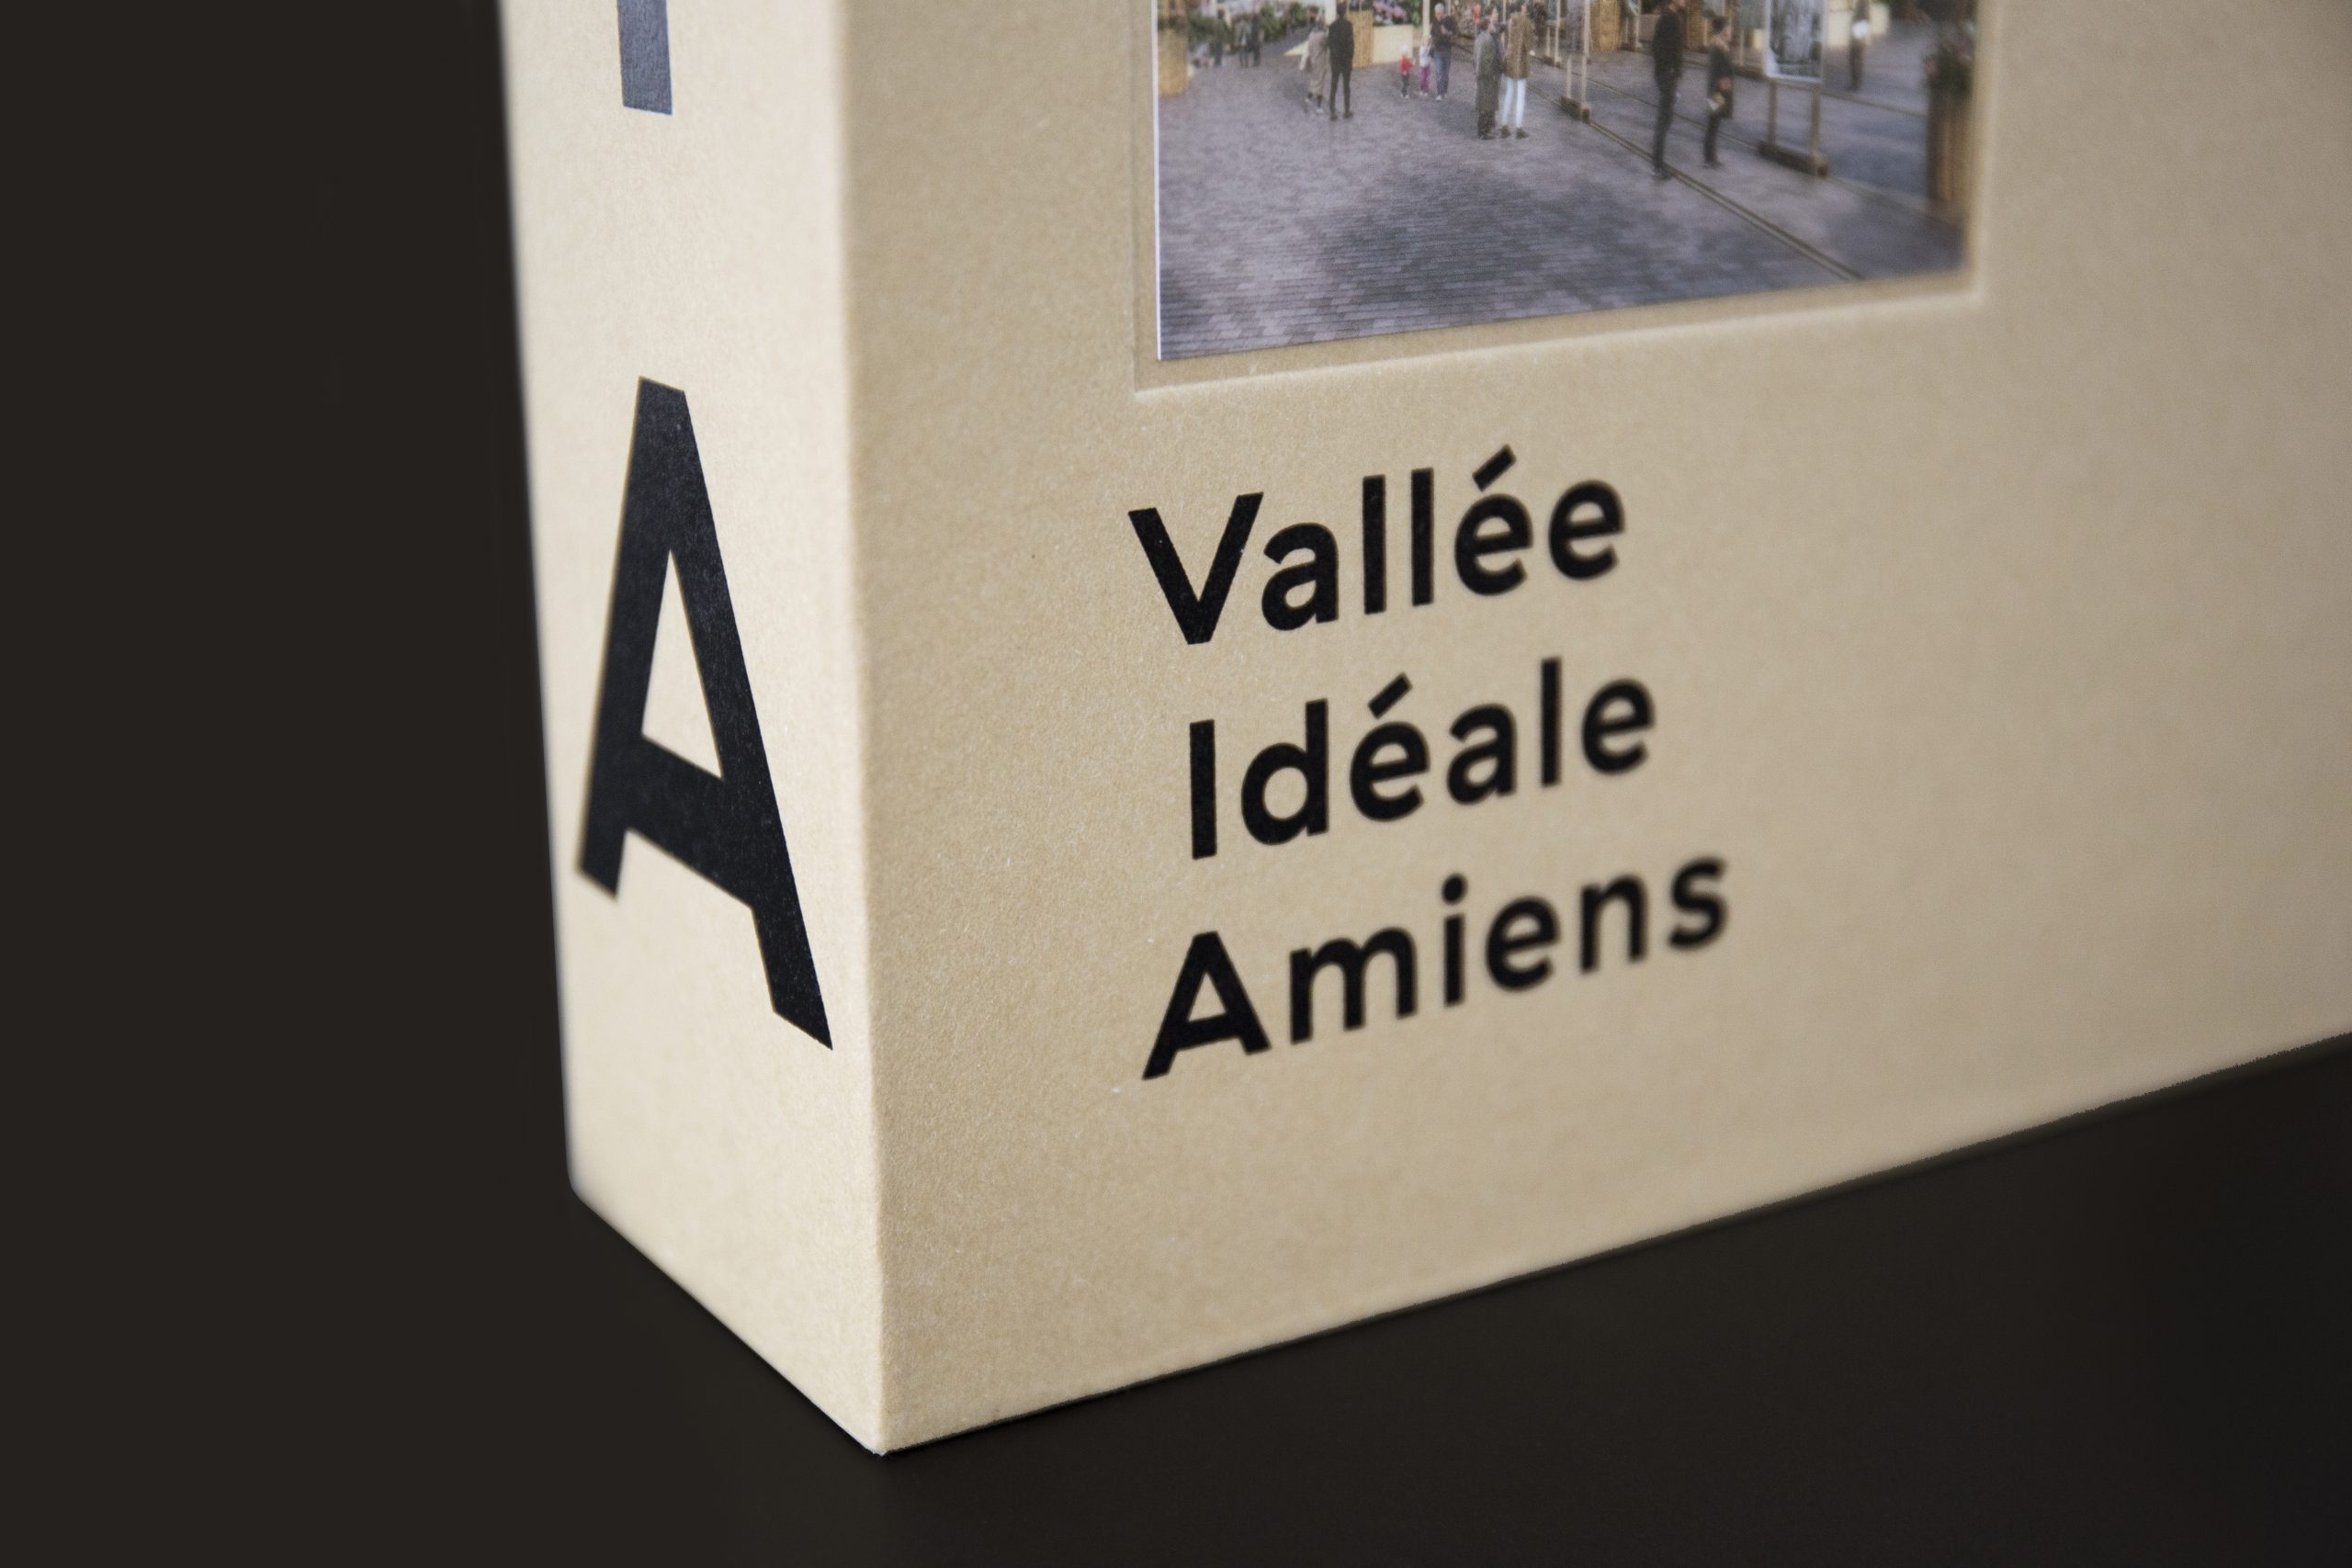 Vallee ideale Amiens projet VIA linkcity